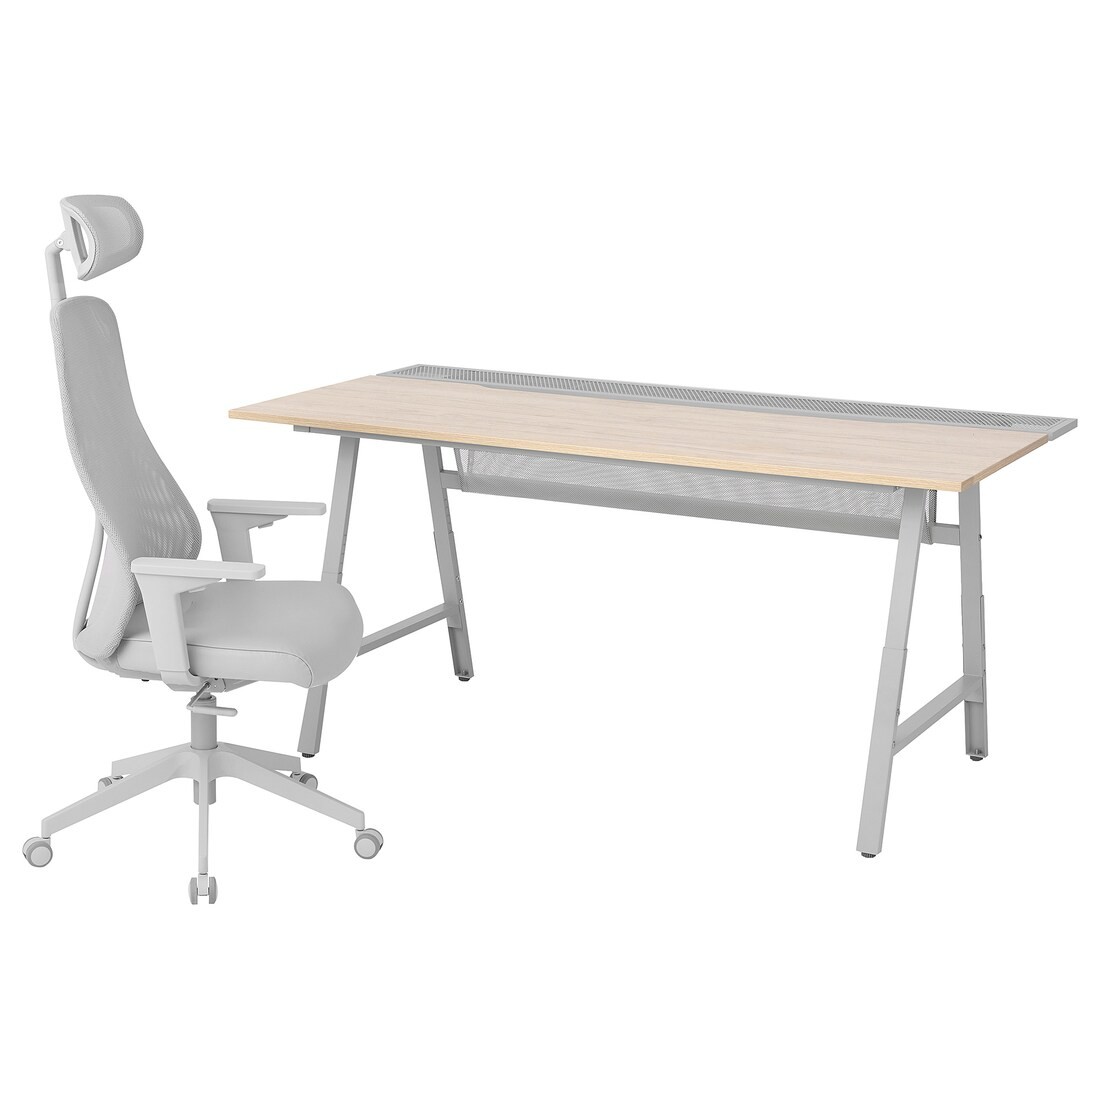 UTESPELARE / MATCHSPEL Геймерский стол и стул, имитация пепла / светло-серый